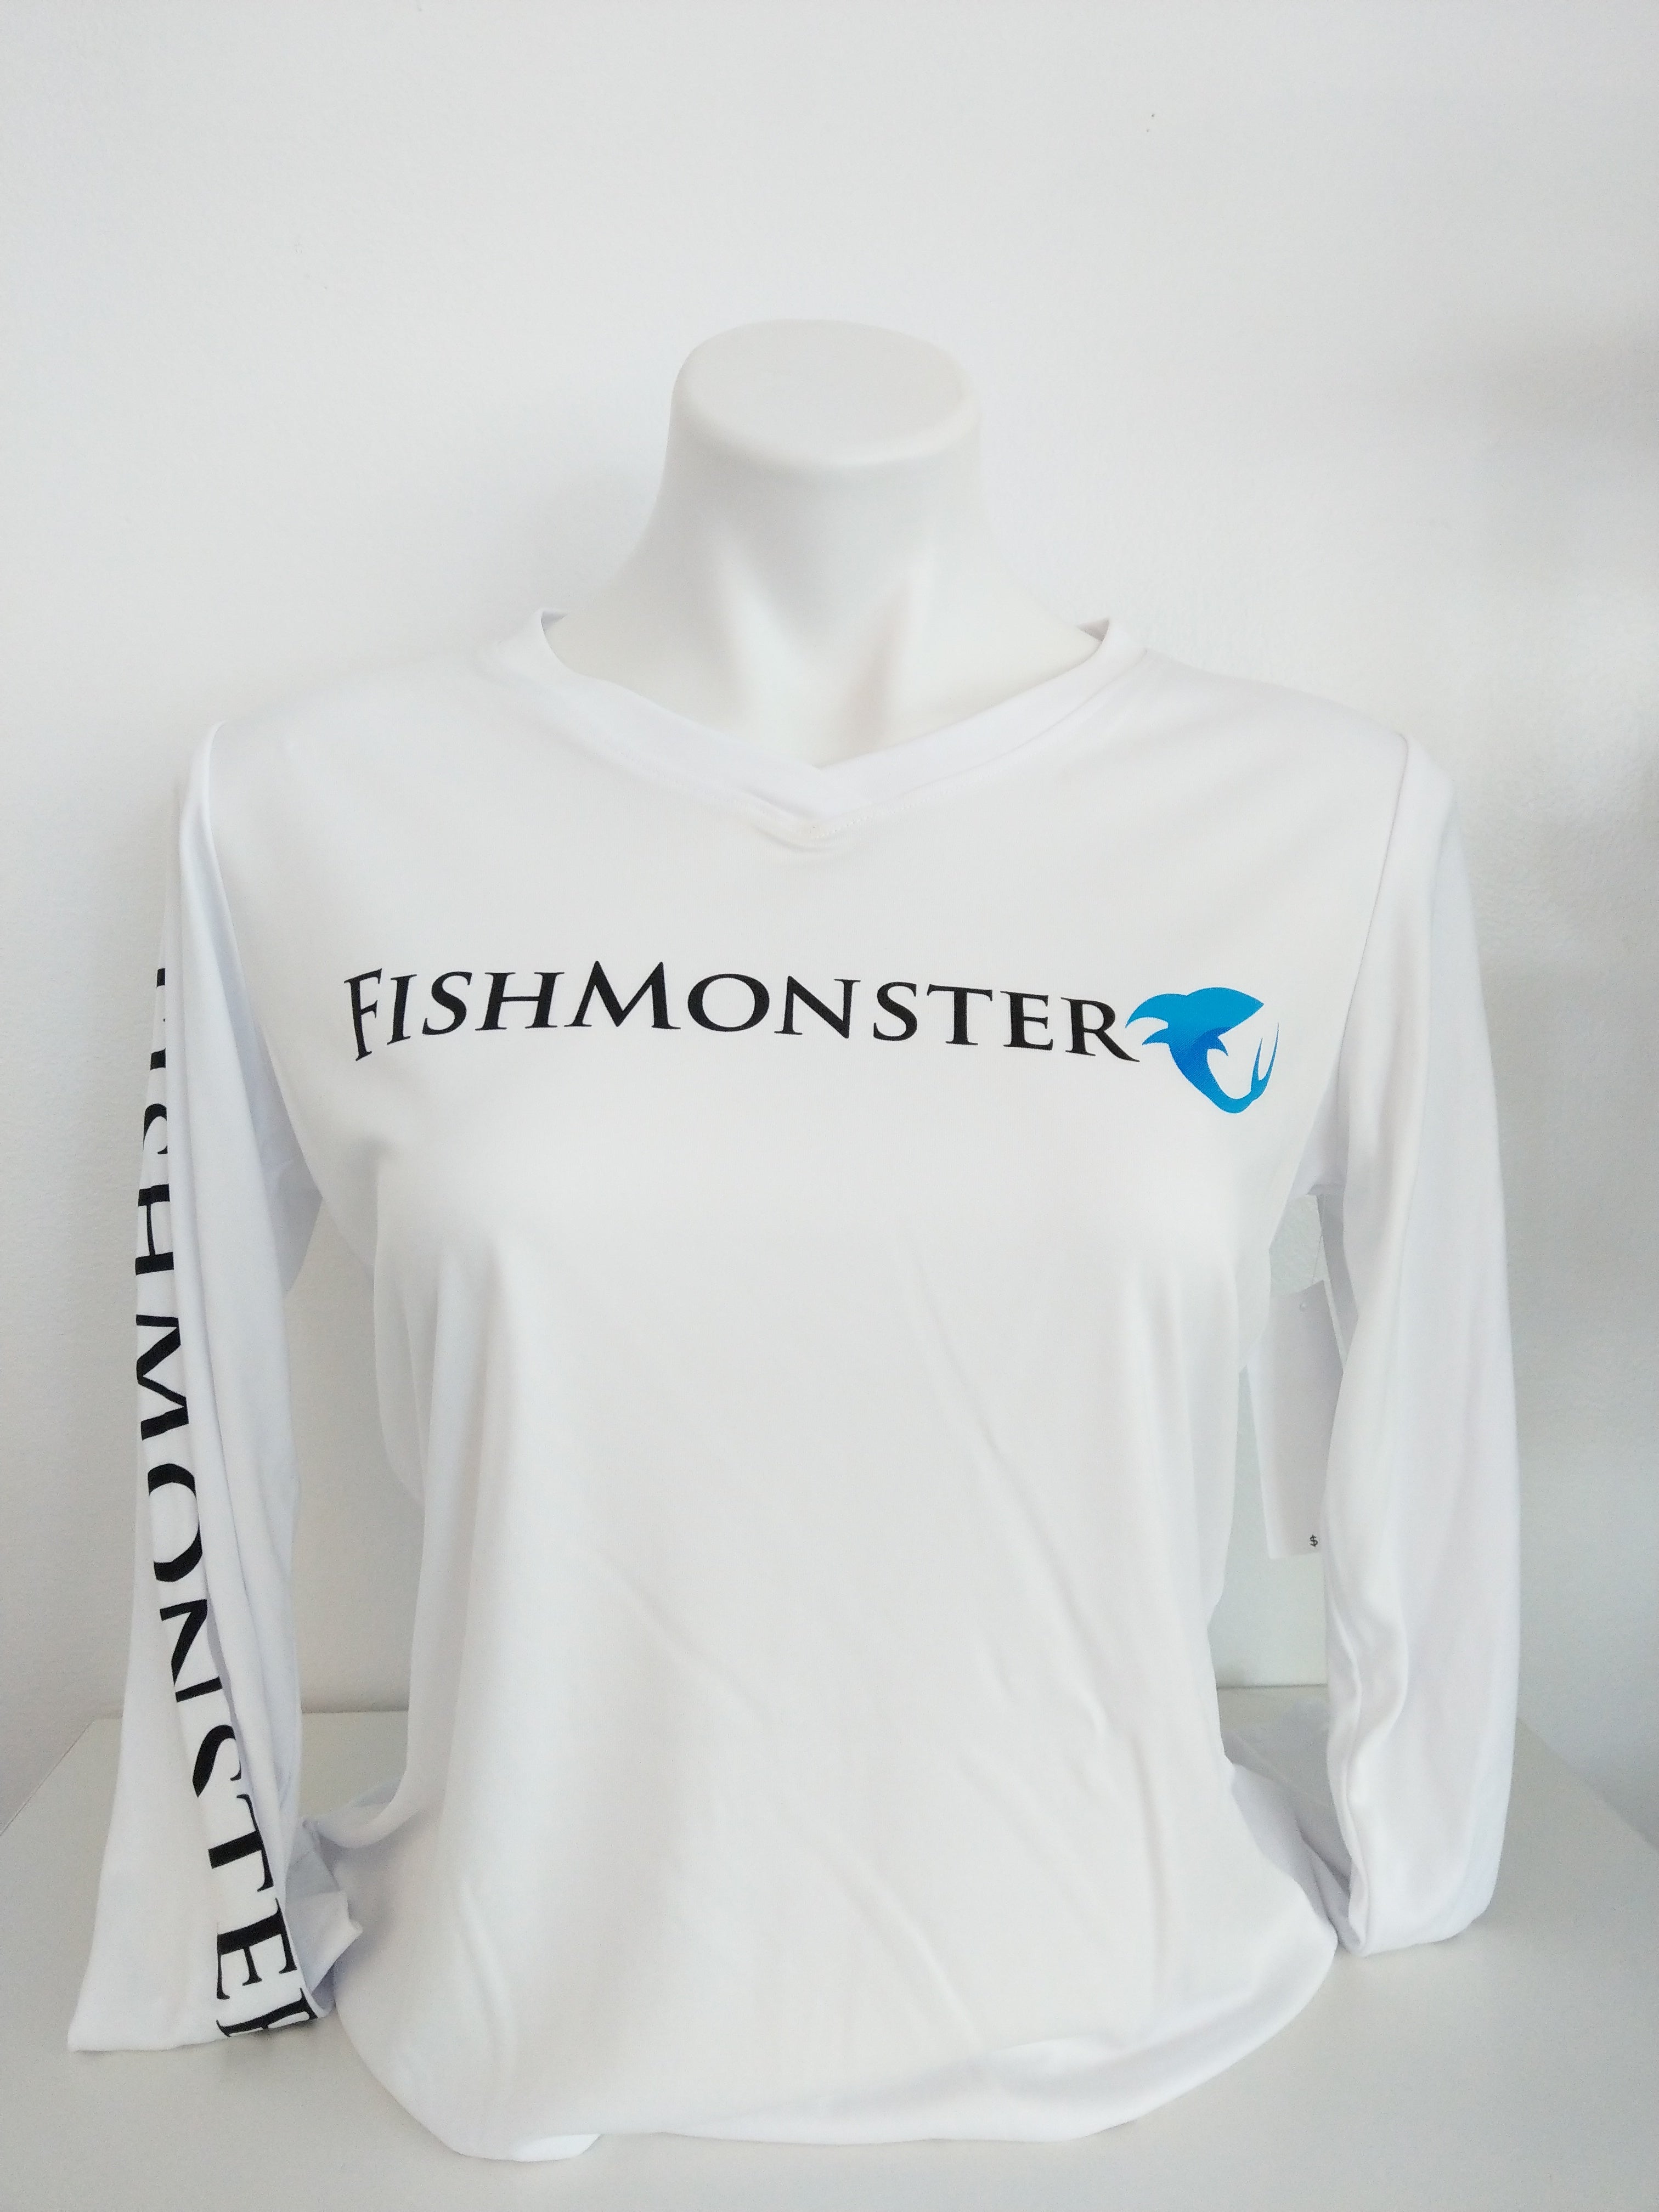 Women's Performance Fishing Shirt Long Sleeve UPF 50+ (Mahi), S